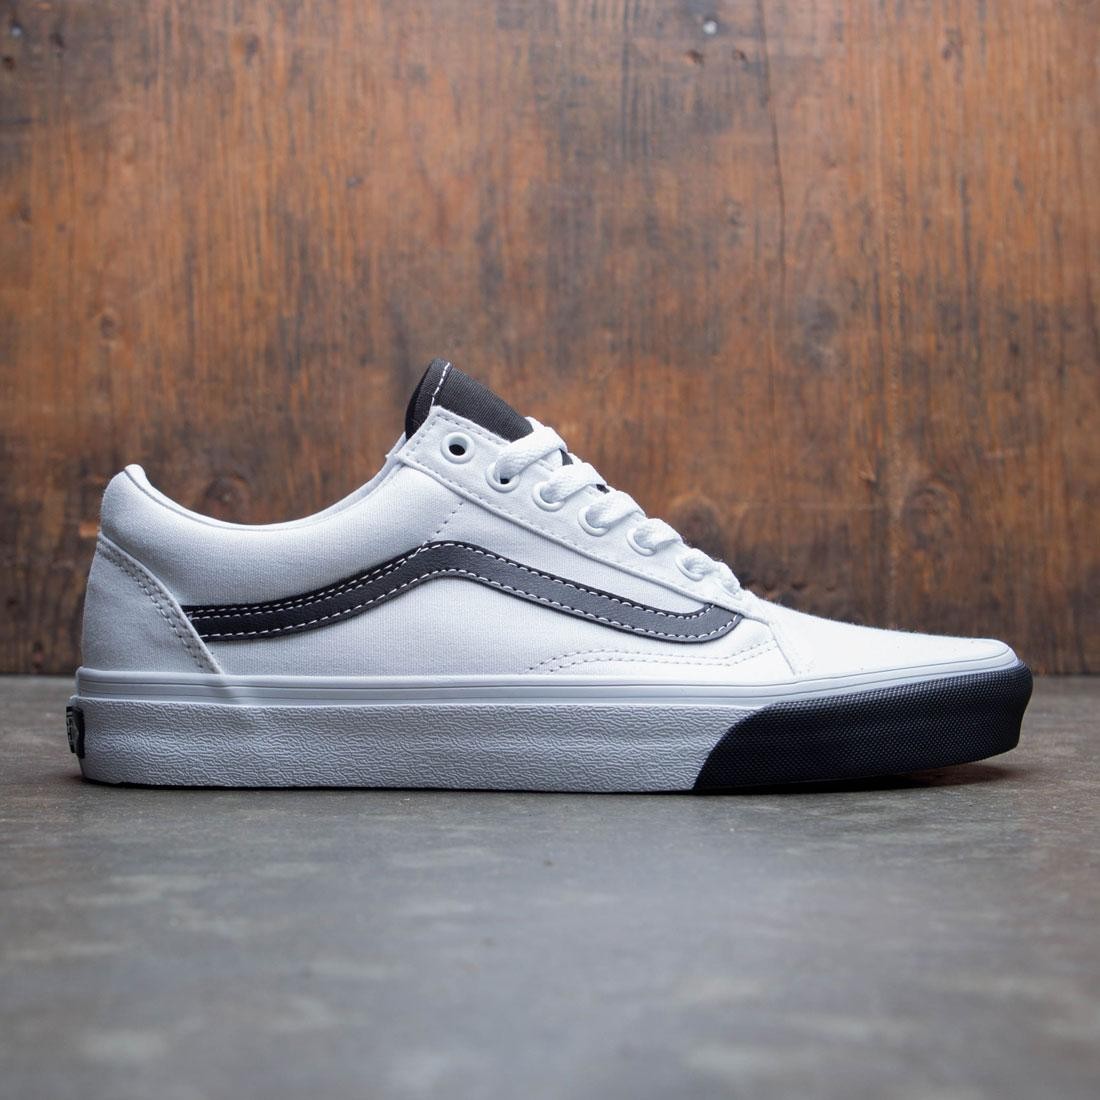 Vans Men's Old Skool Sneaker - Black/White